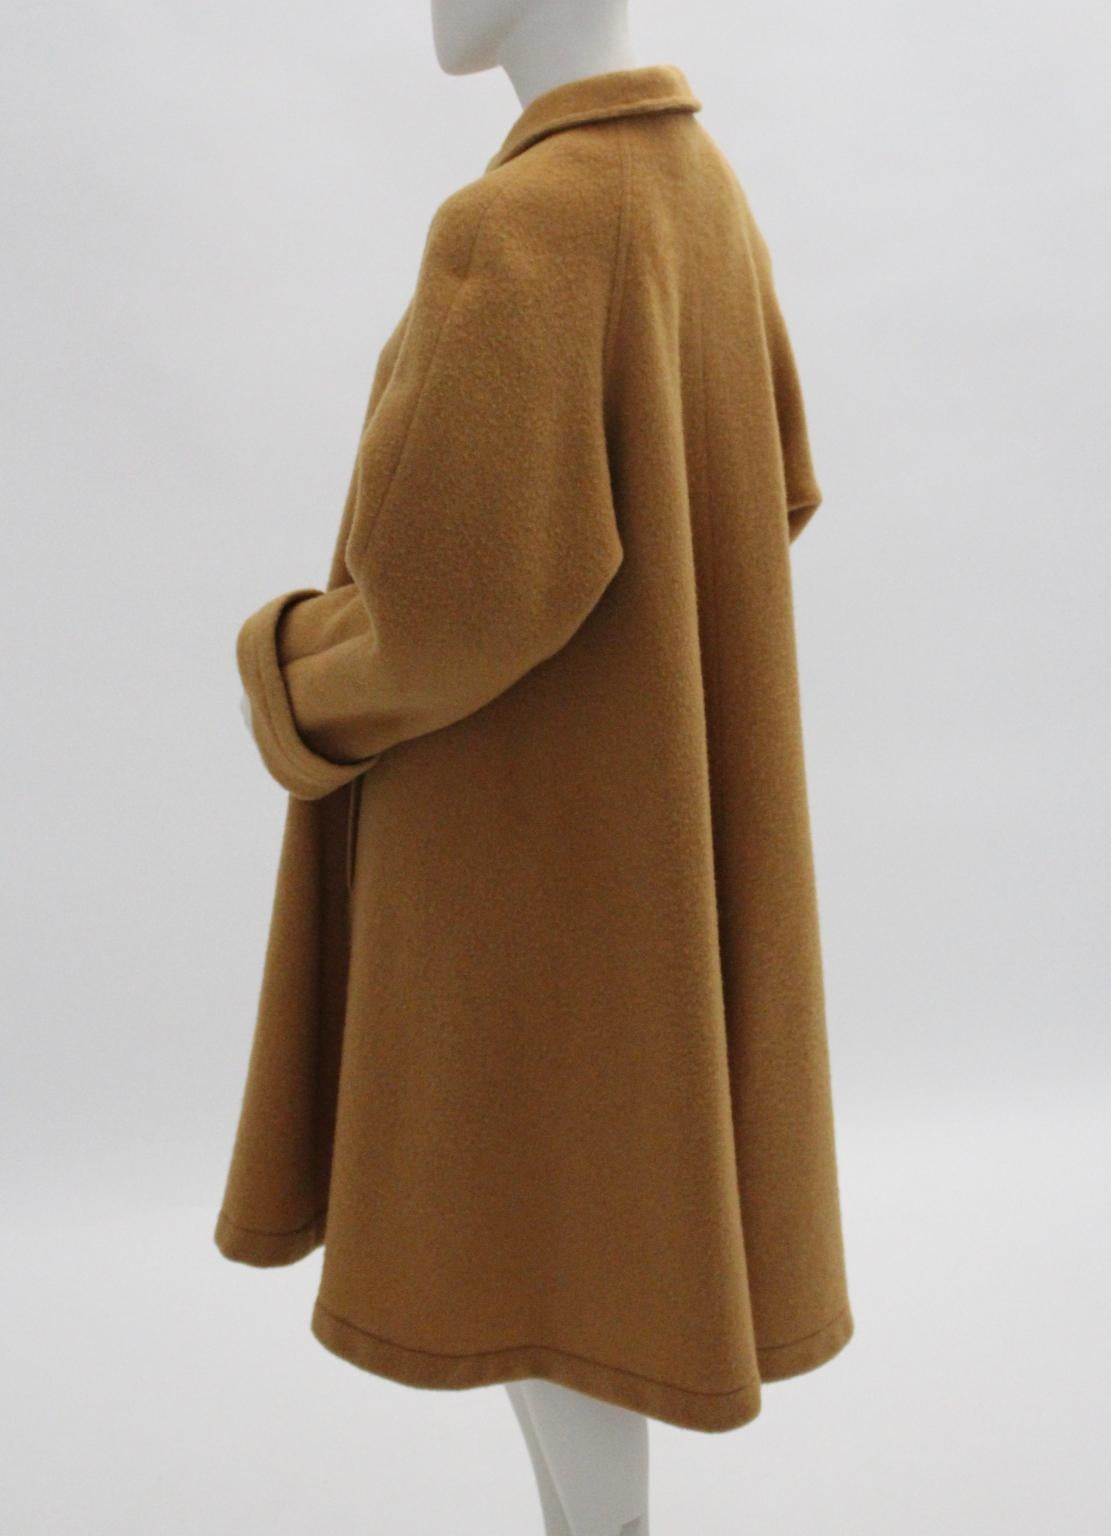 Guy Laroche Diffusion Paris Vintage Wool Coat 1970s For Sale 2